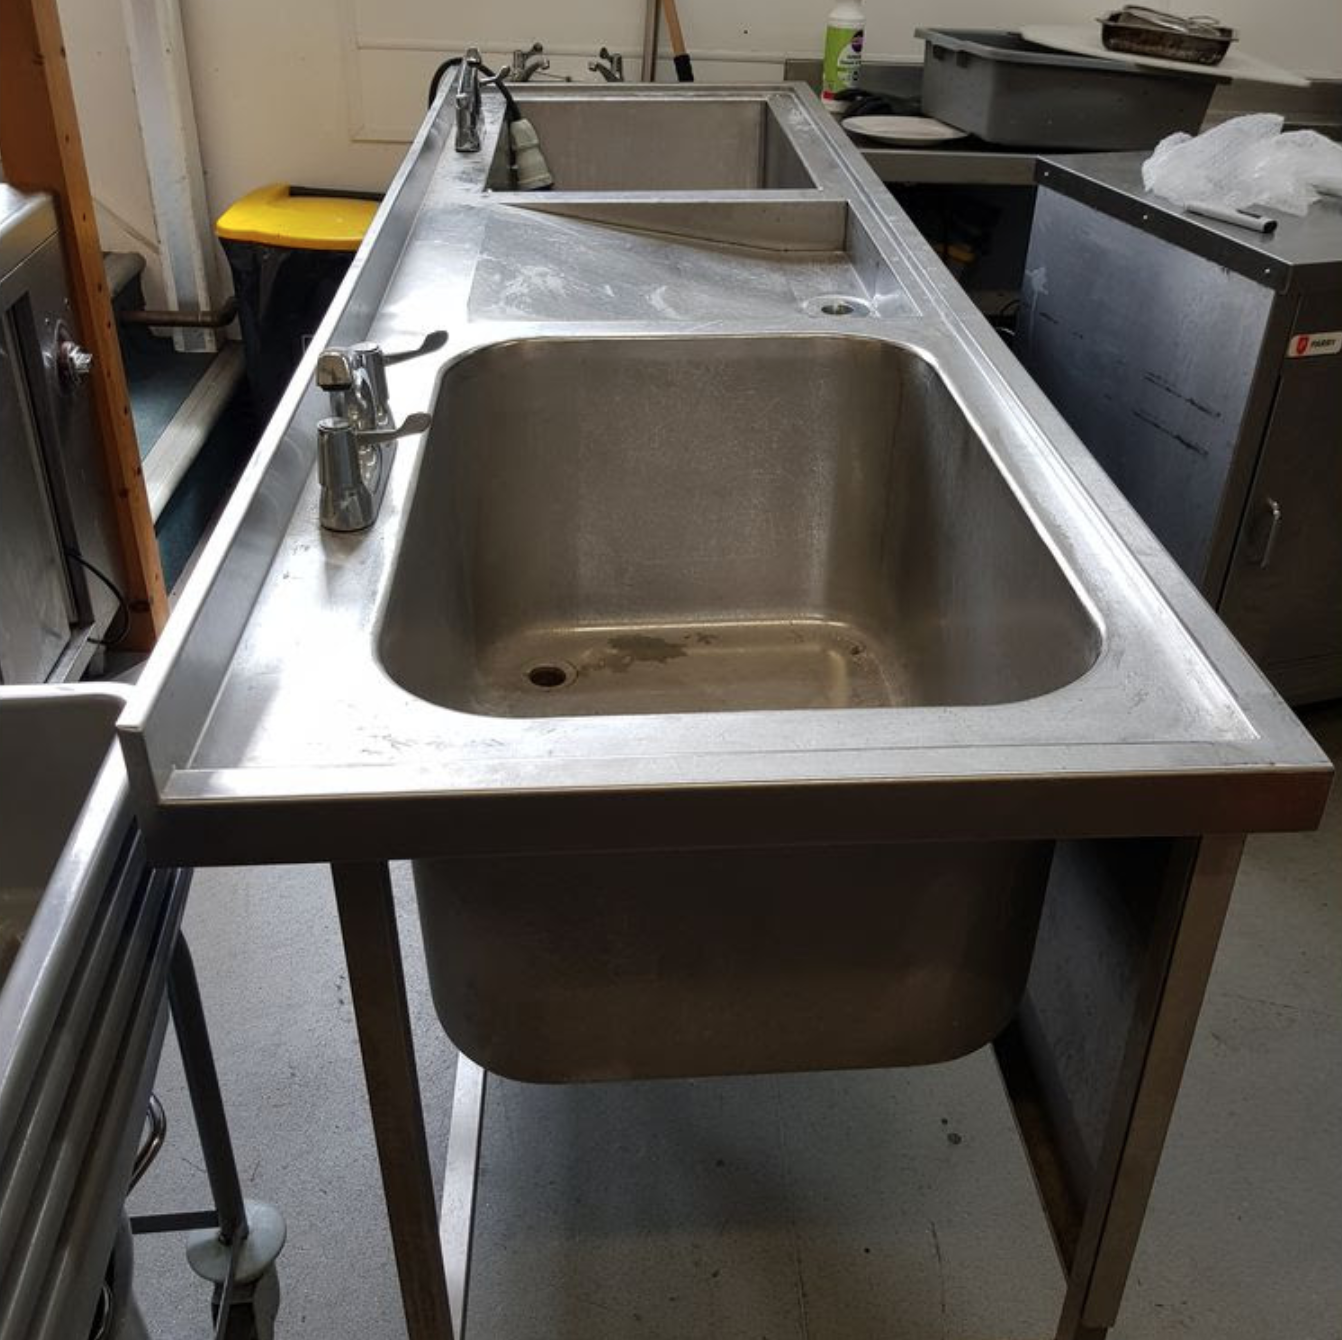 Heated Sink Milton Keynes Buckinghamshire